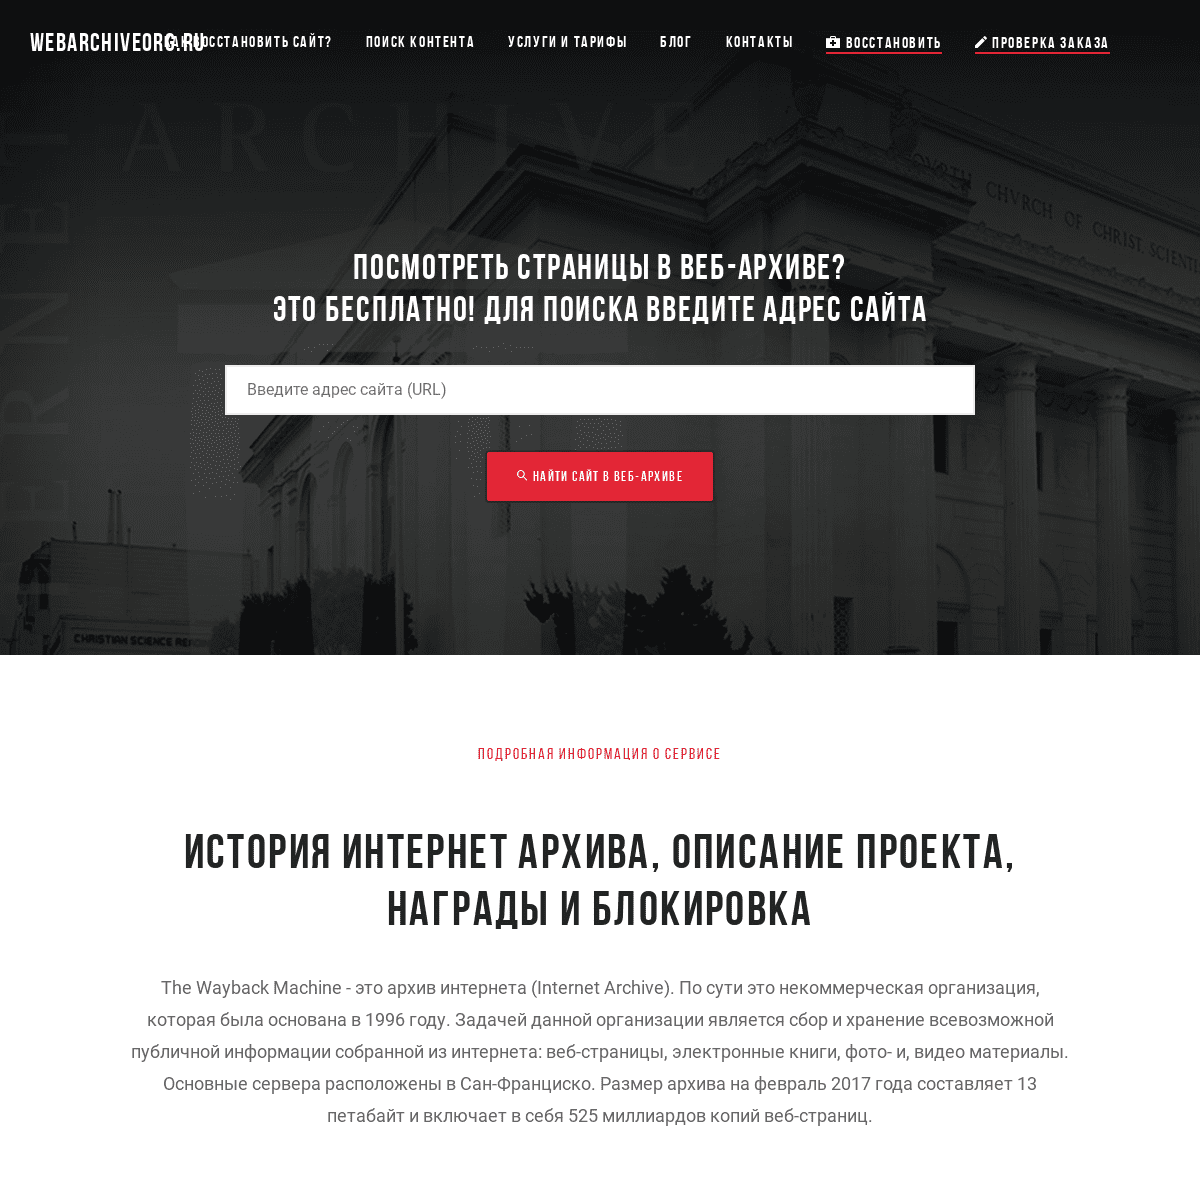 A complete backup of webarchiveorg.ru